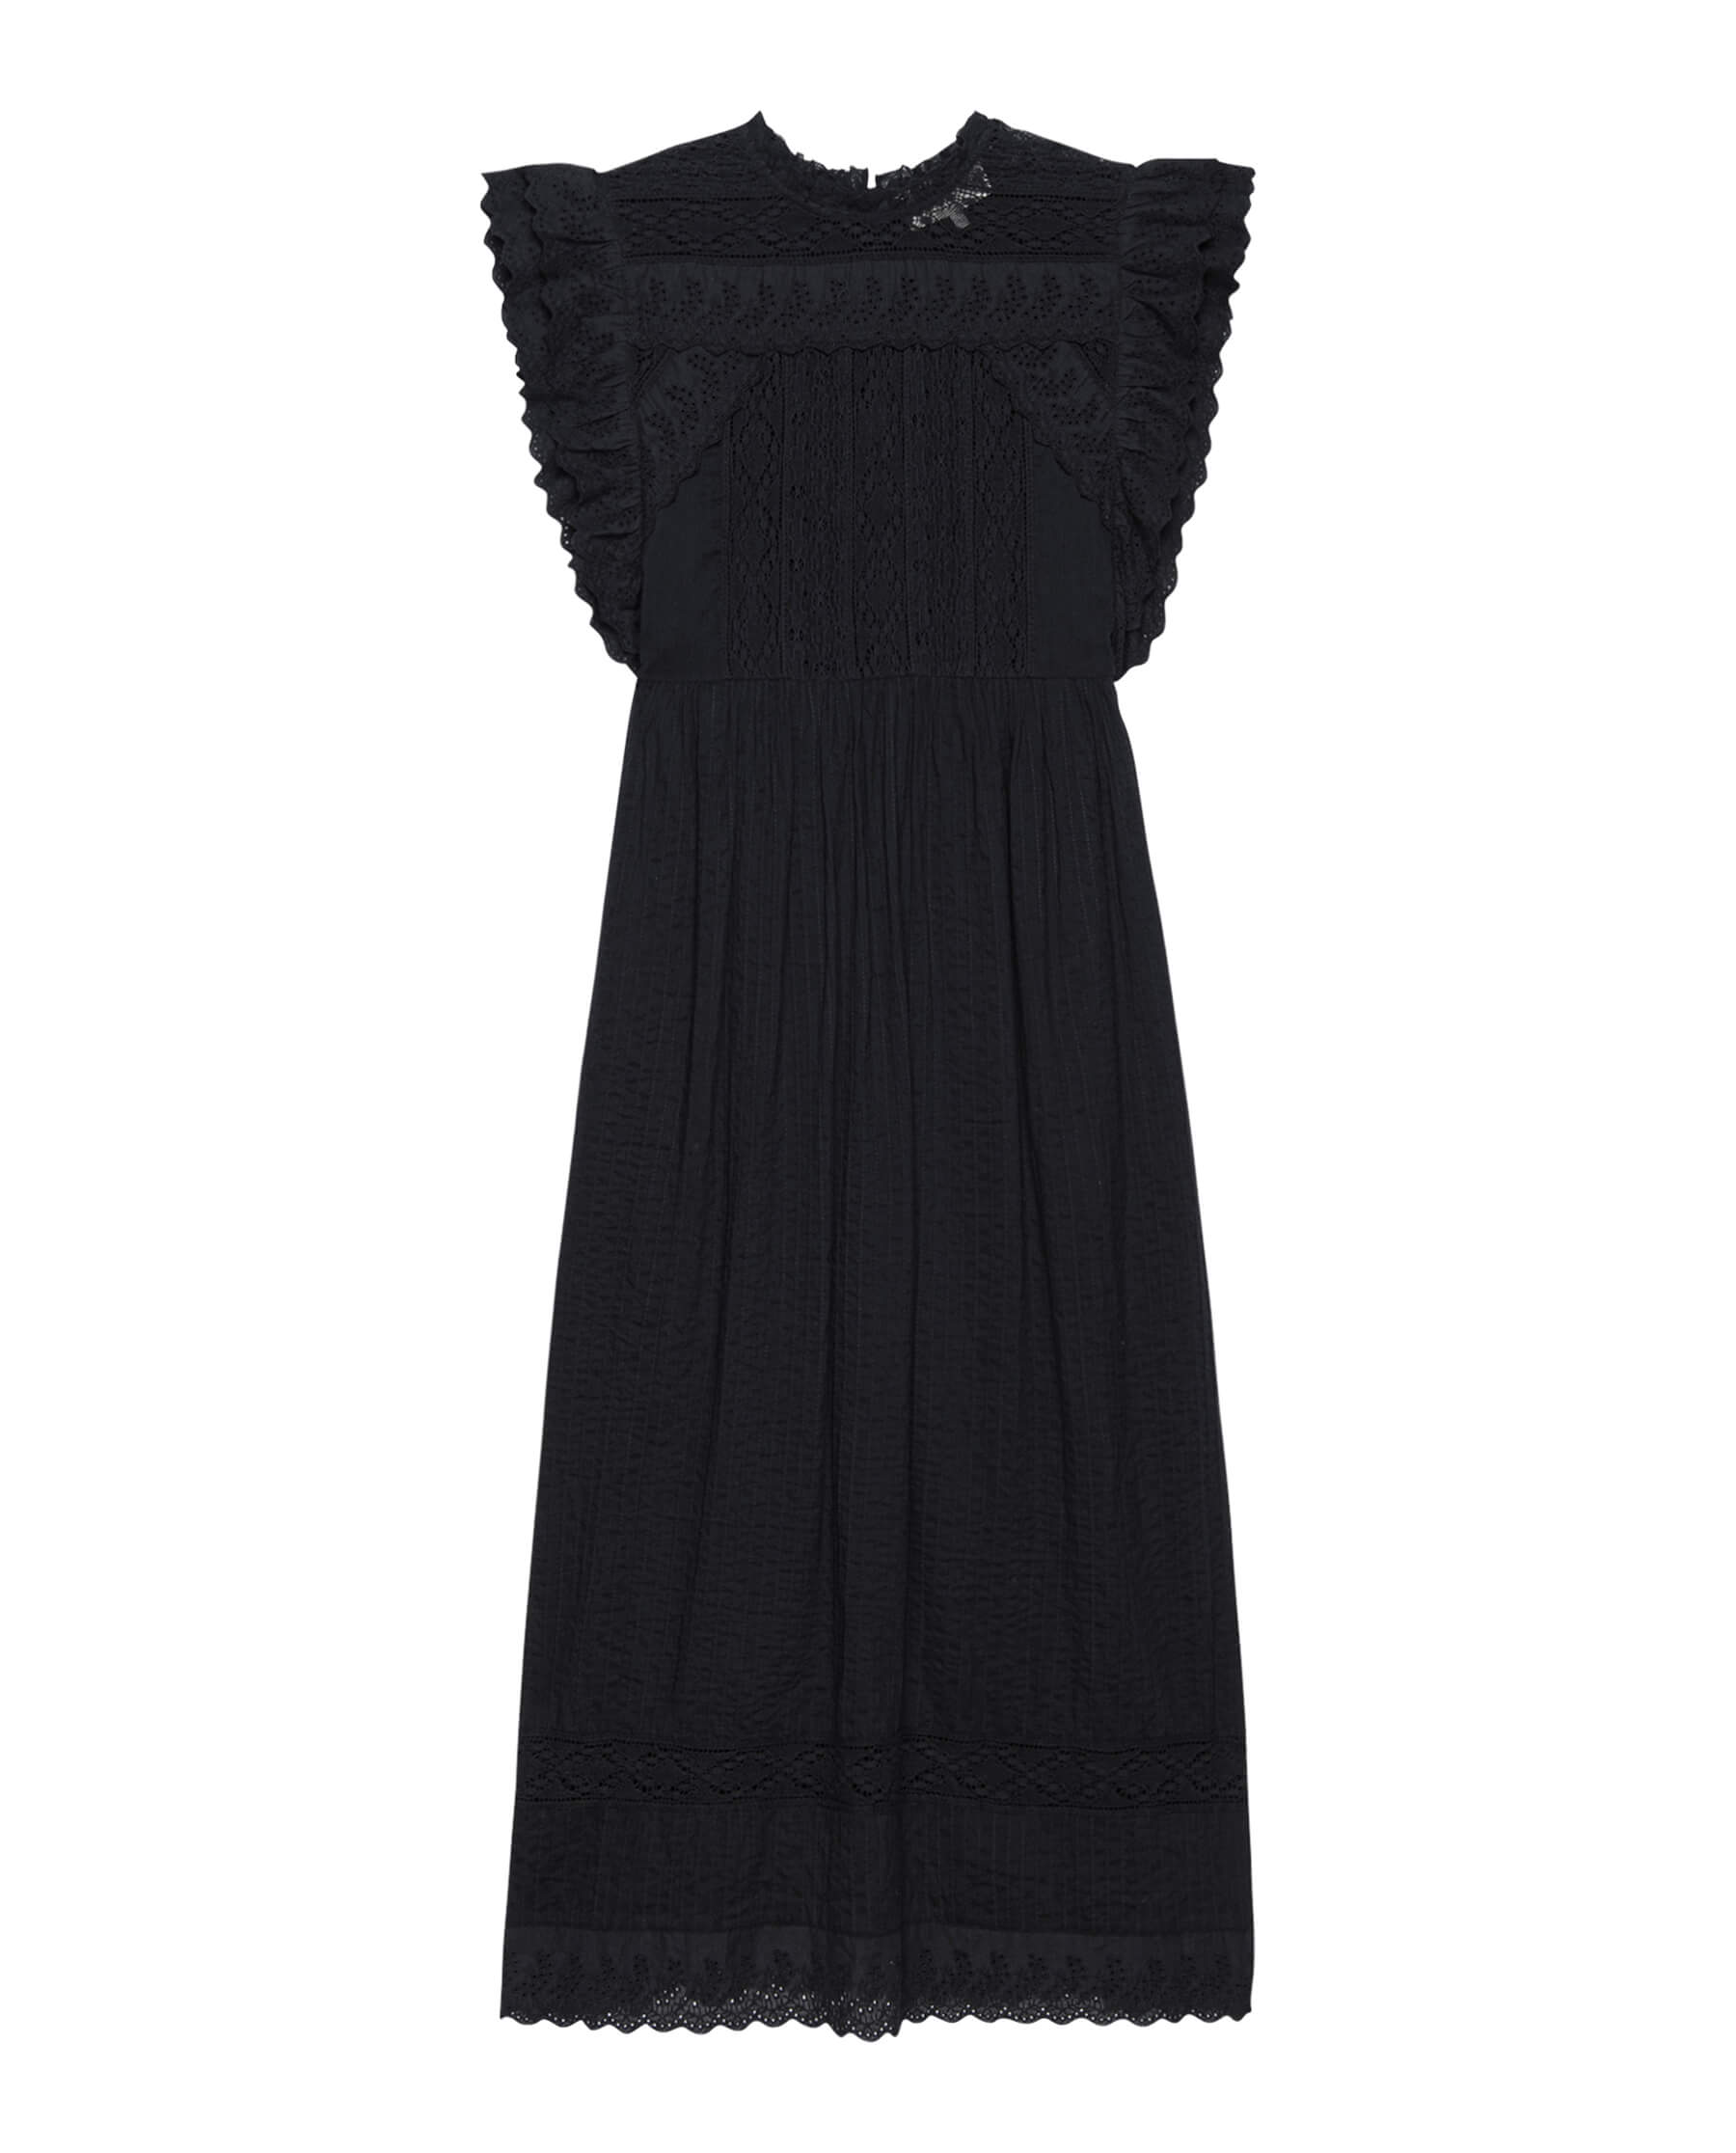 The Trellis Dress. -- Black